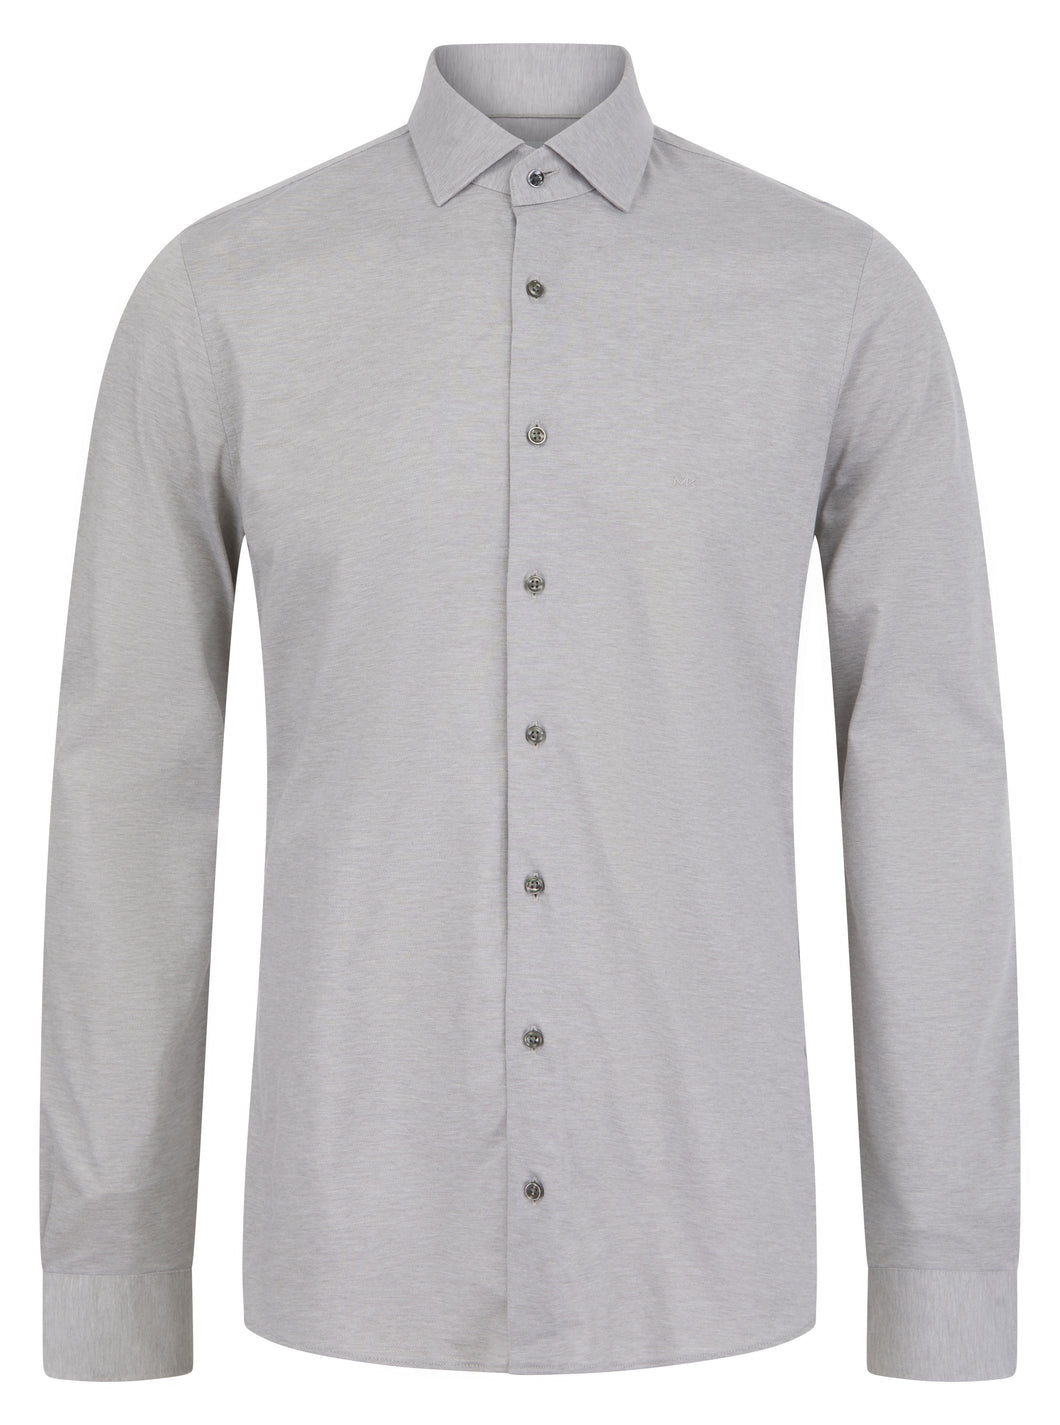 Michael Kors Pique Shirt Grey